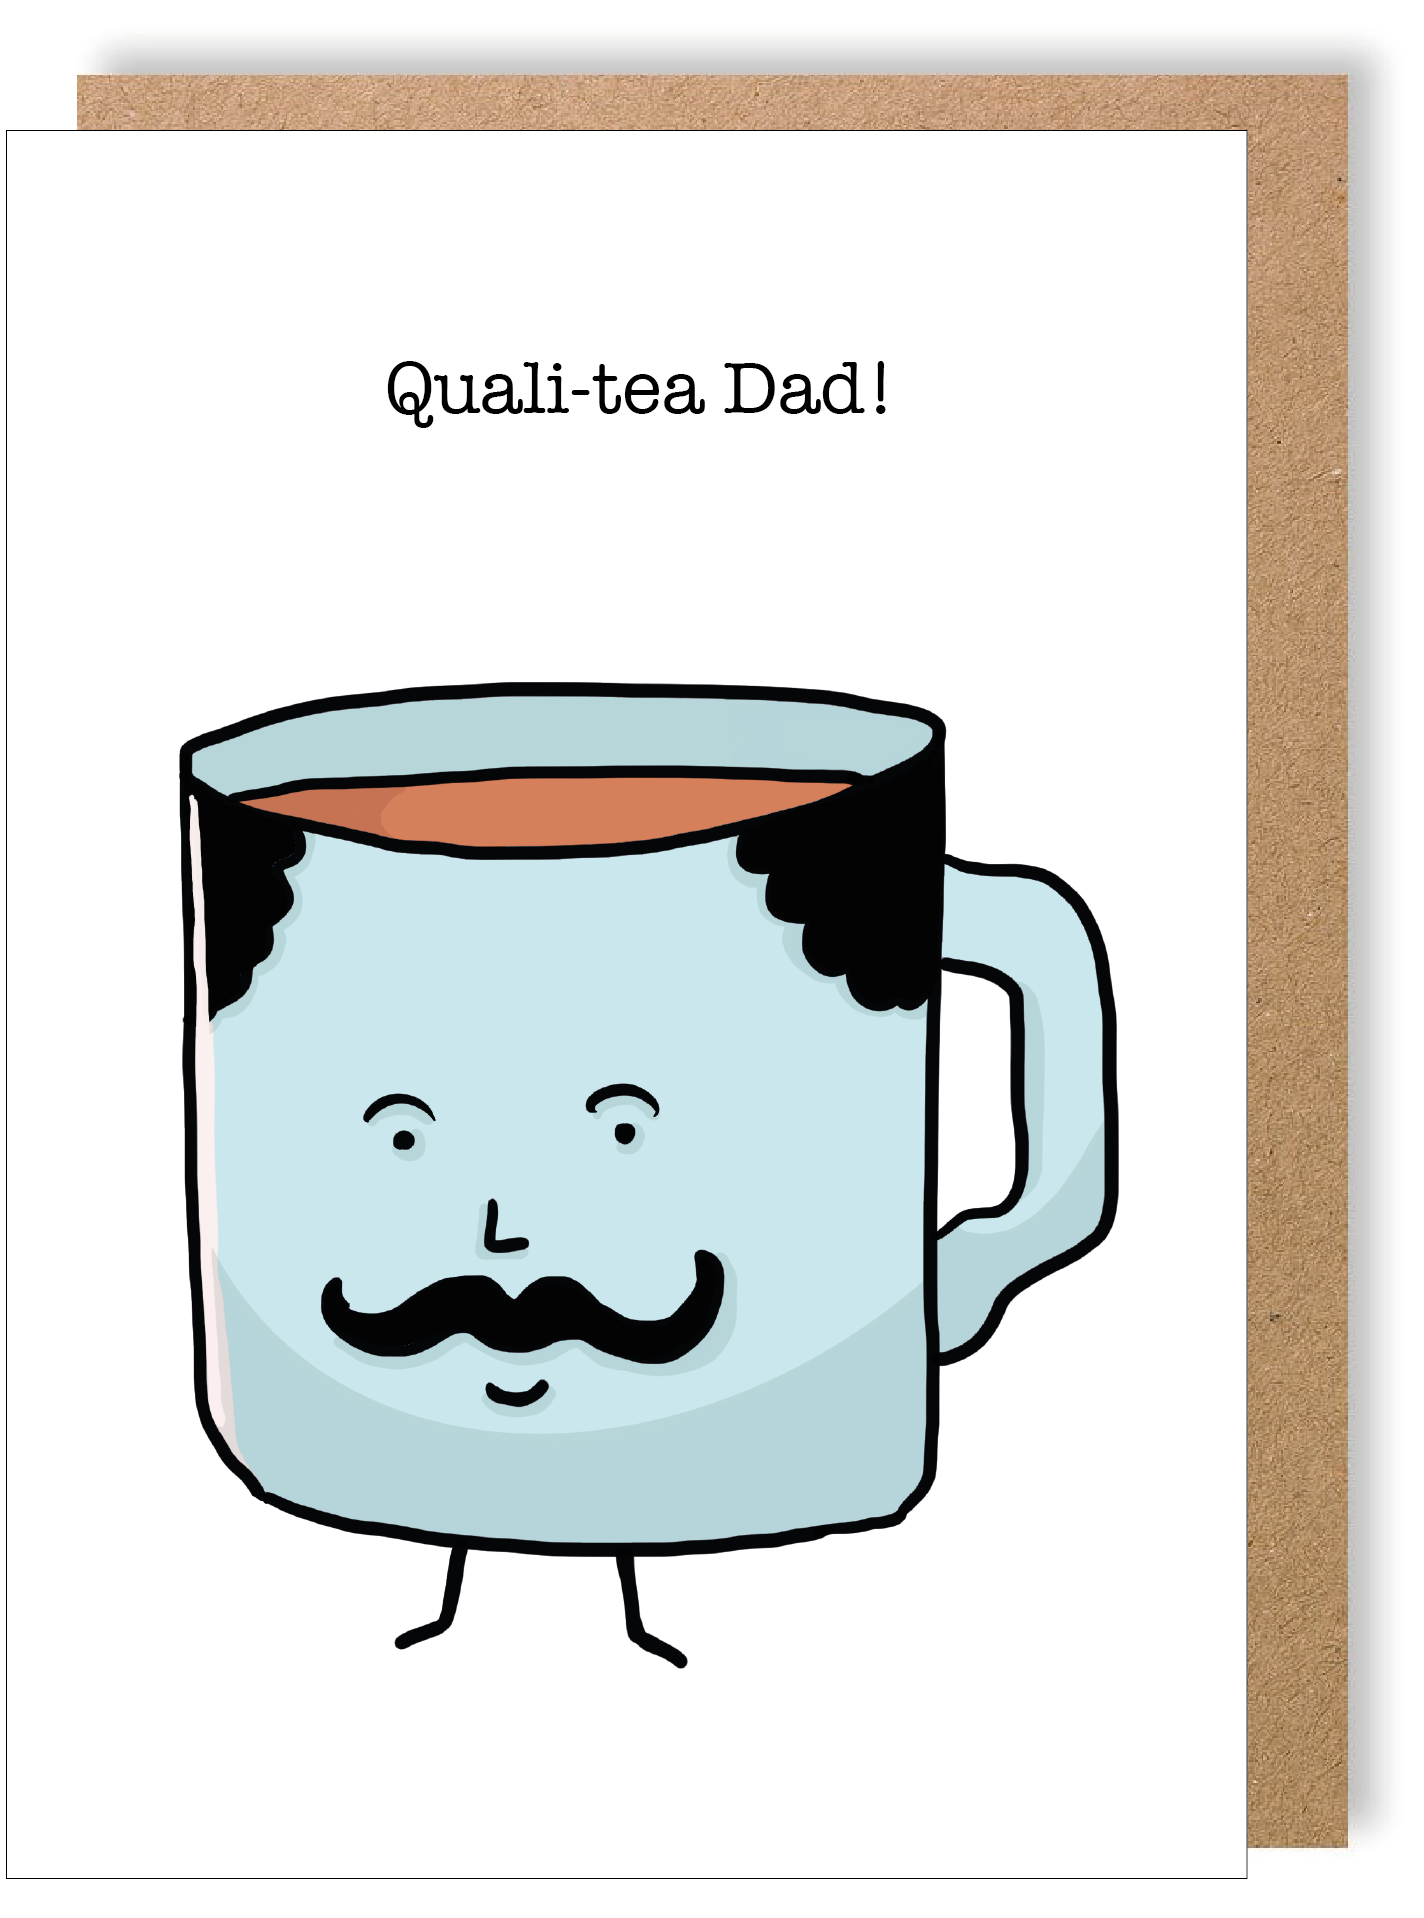 Quality Dad - Tea - Greetings Card - LukeHorton Art